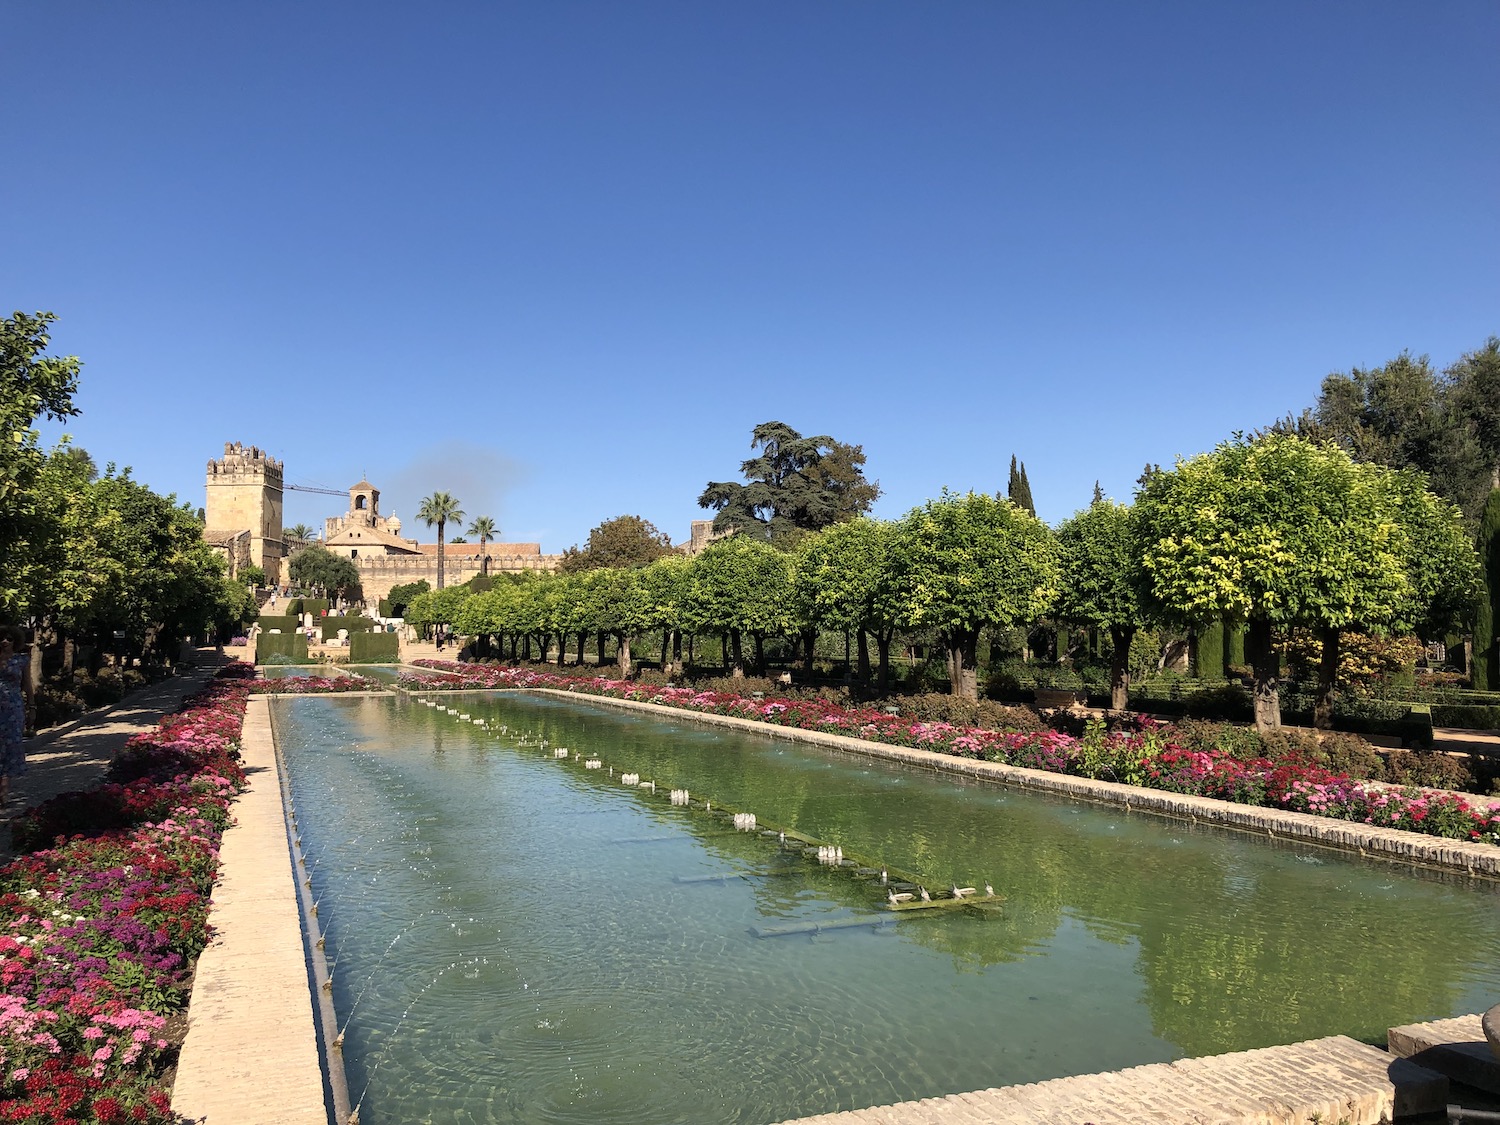 The Alcazar's amazing gardens